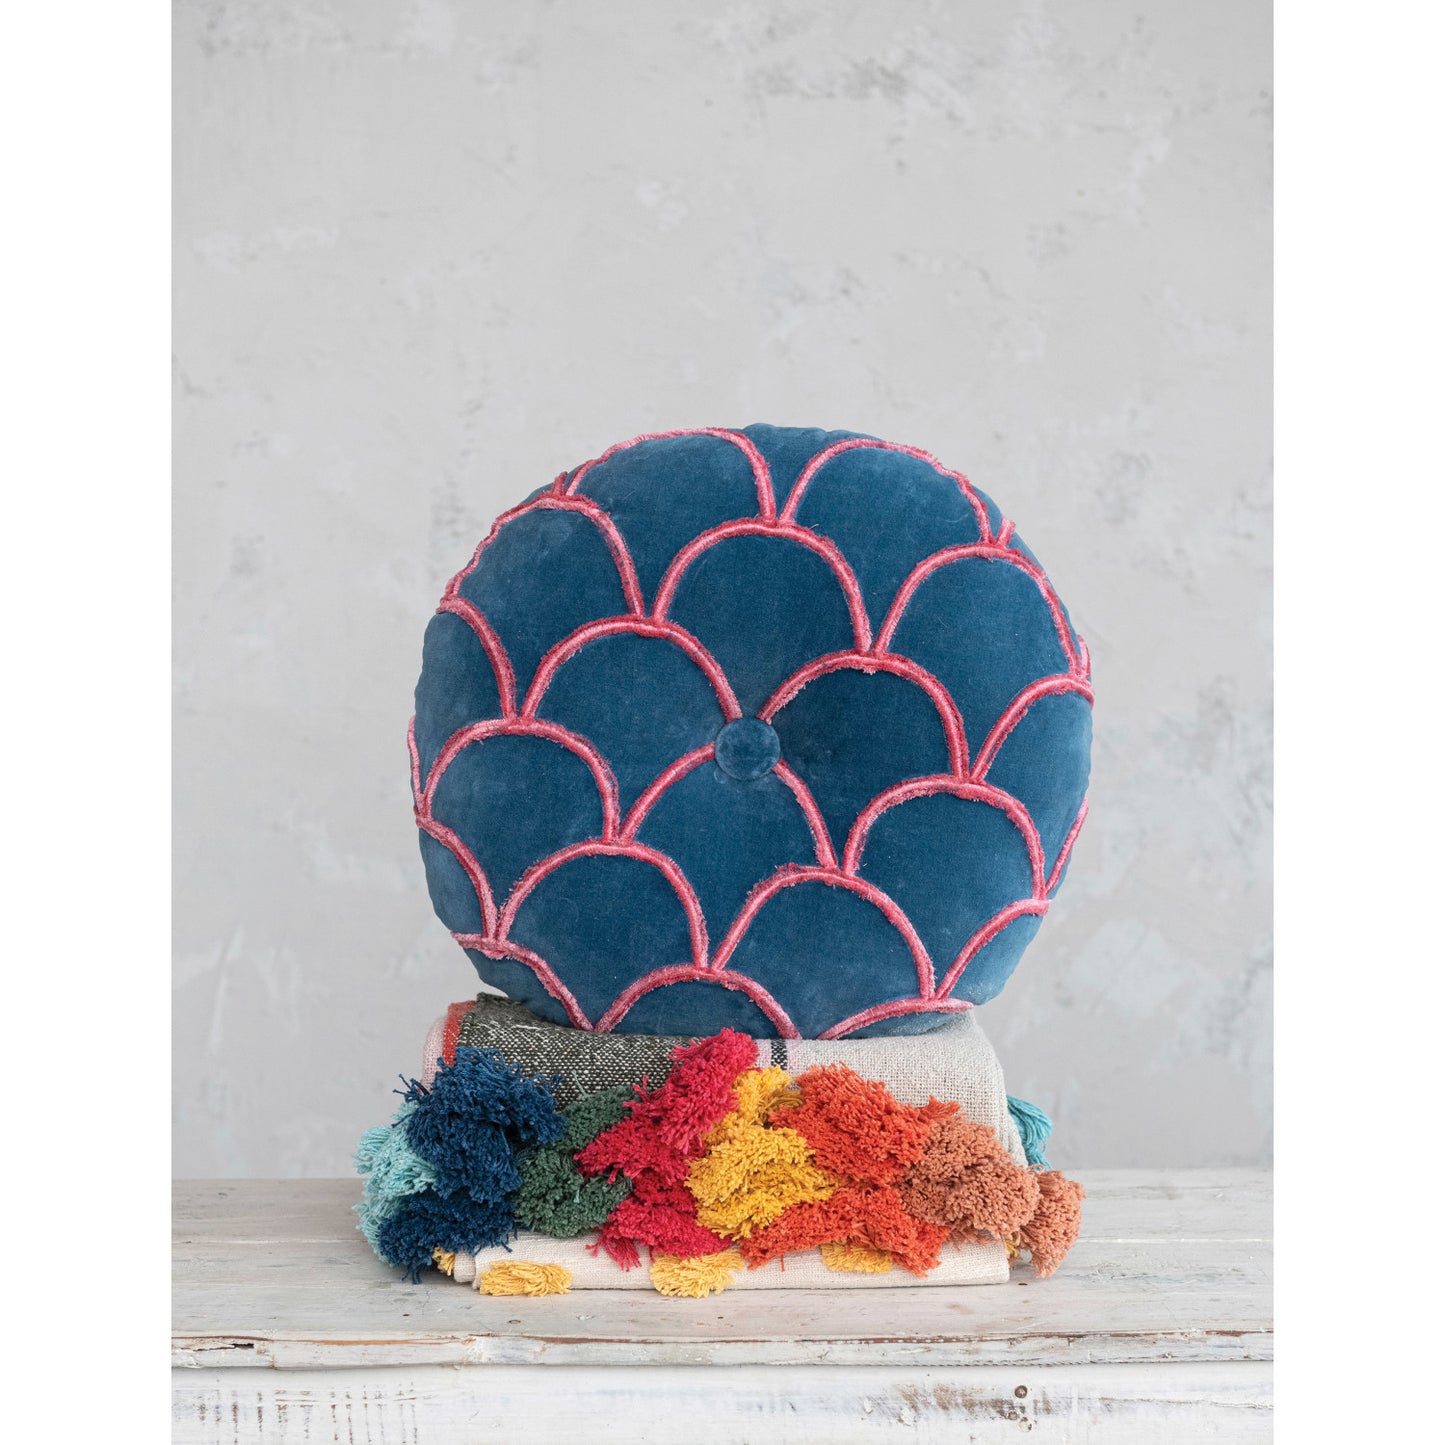 18" Round Cotton Pillow w/ Tufted Scallop Pattern, Navy Blue & Pink